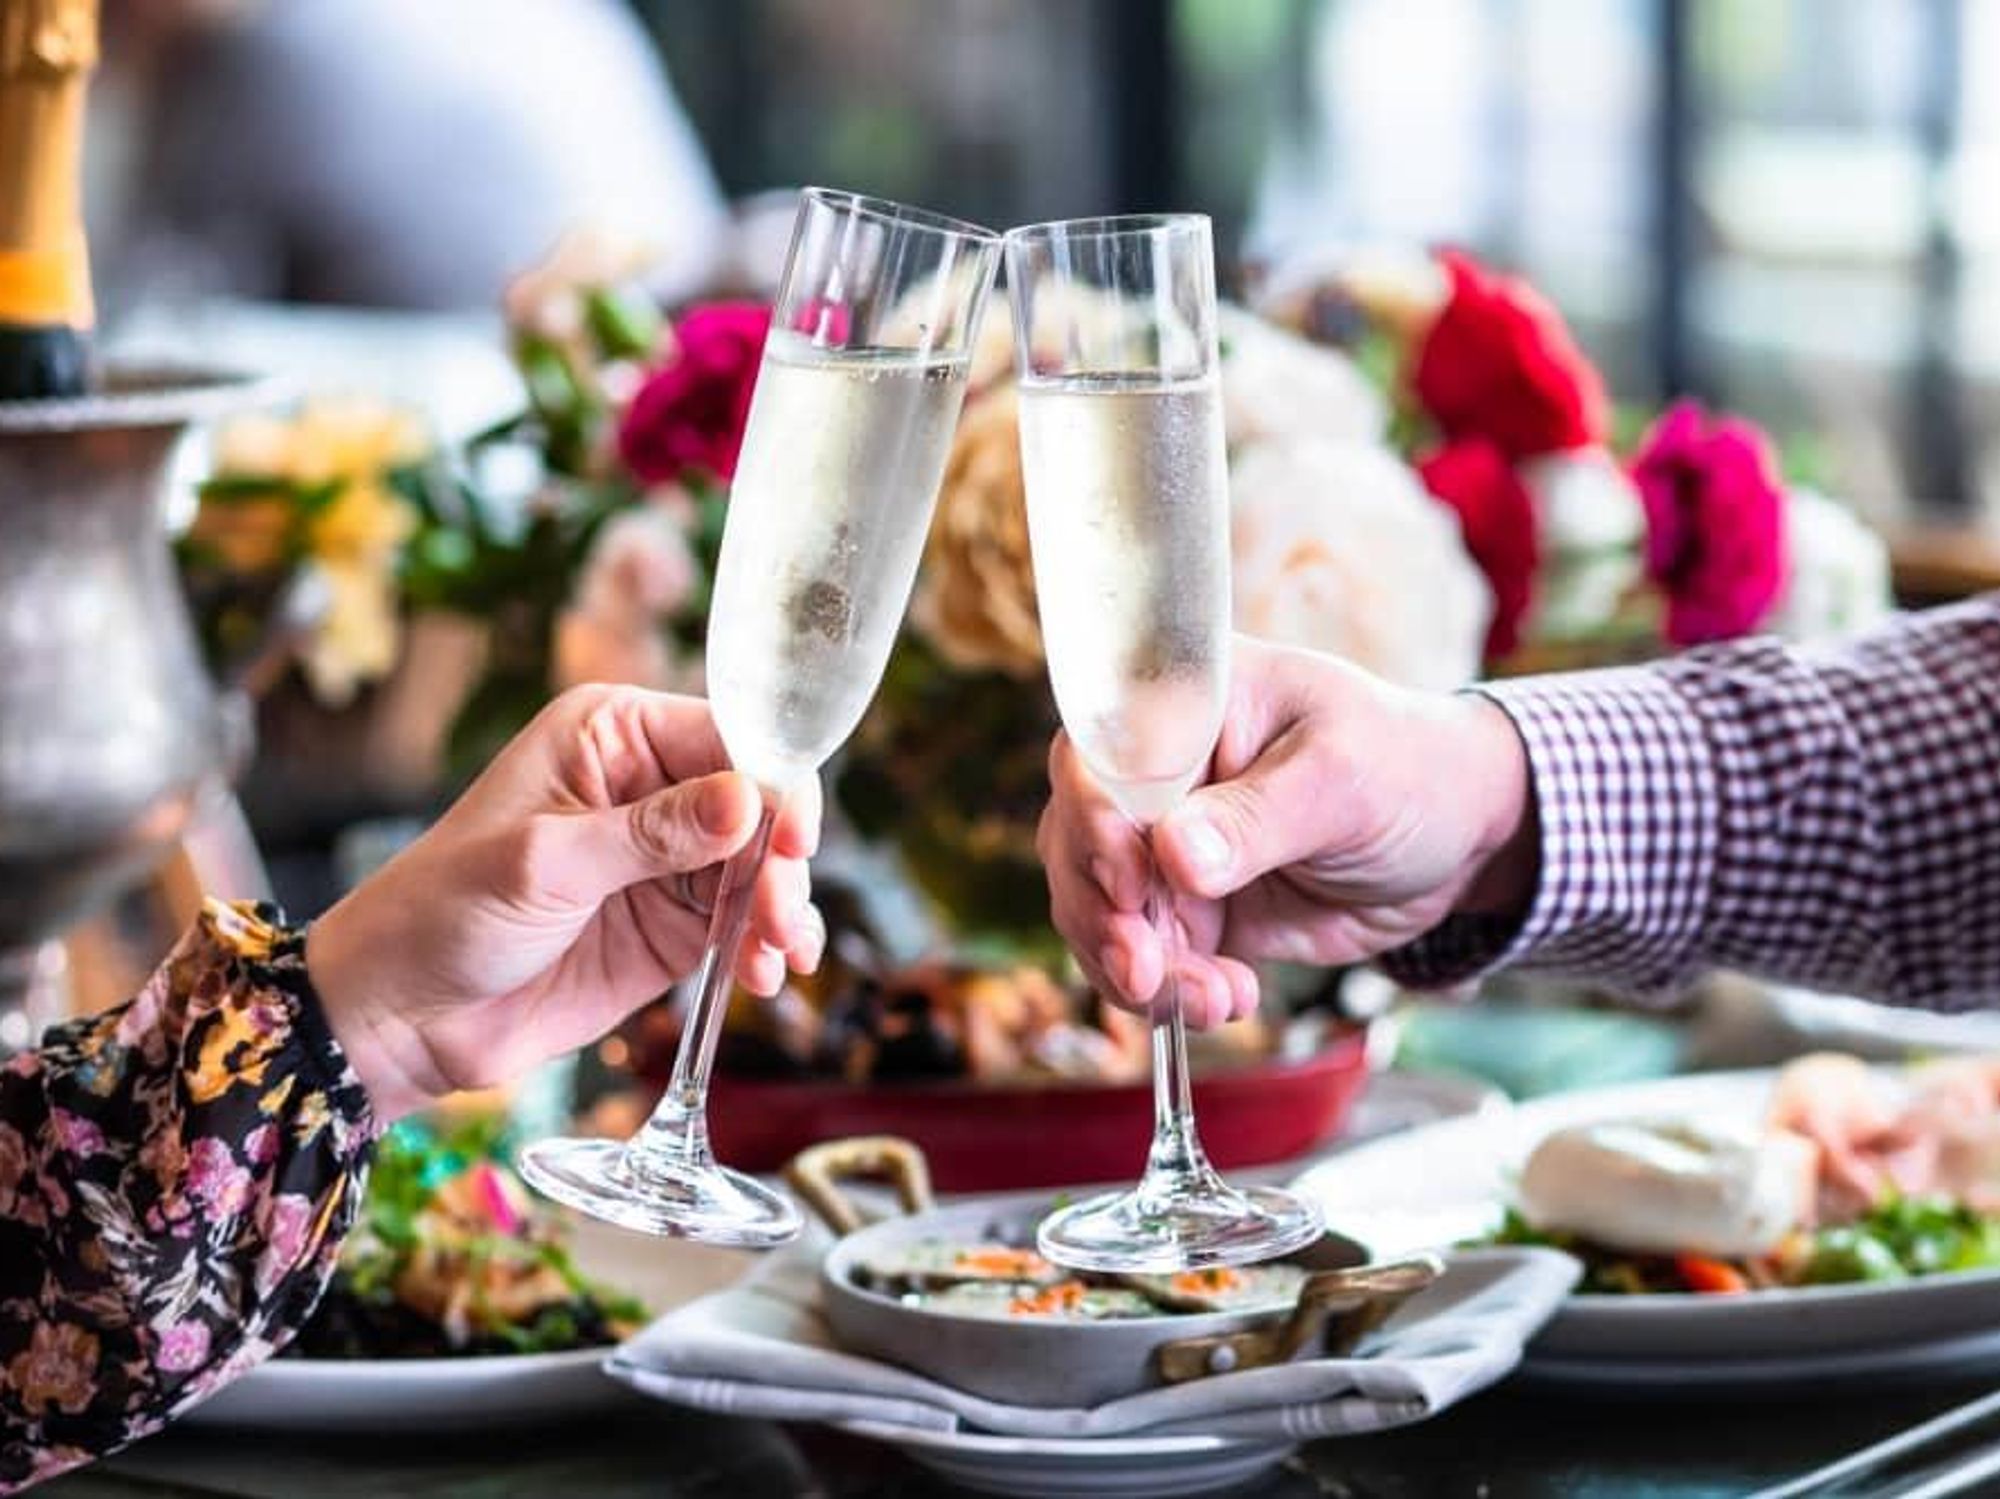 The best Fort Worth restaurants to celebrate Valentine's Day 2022